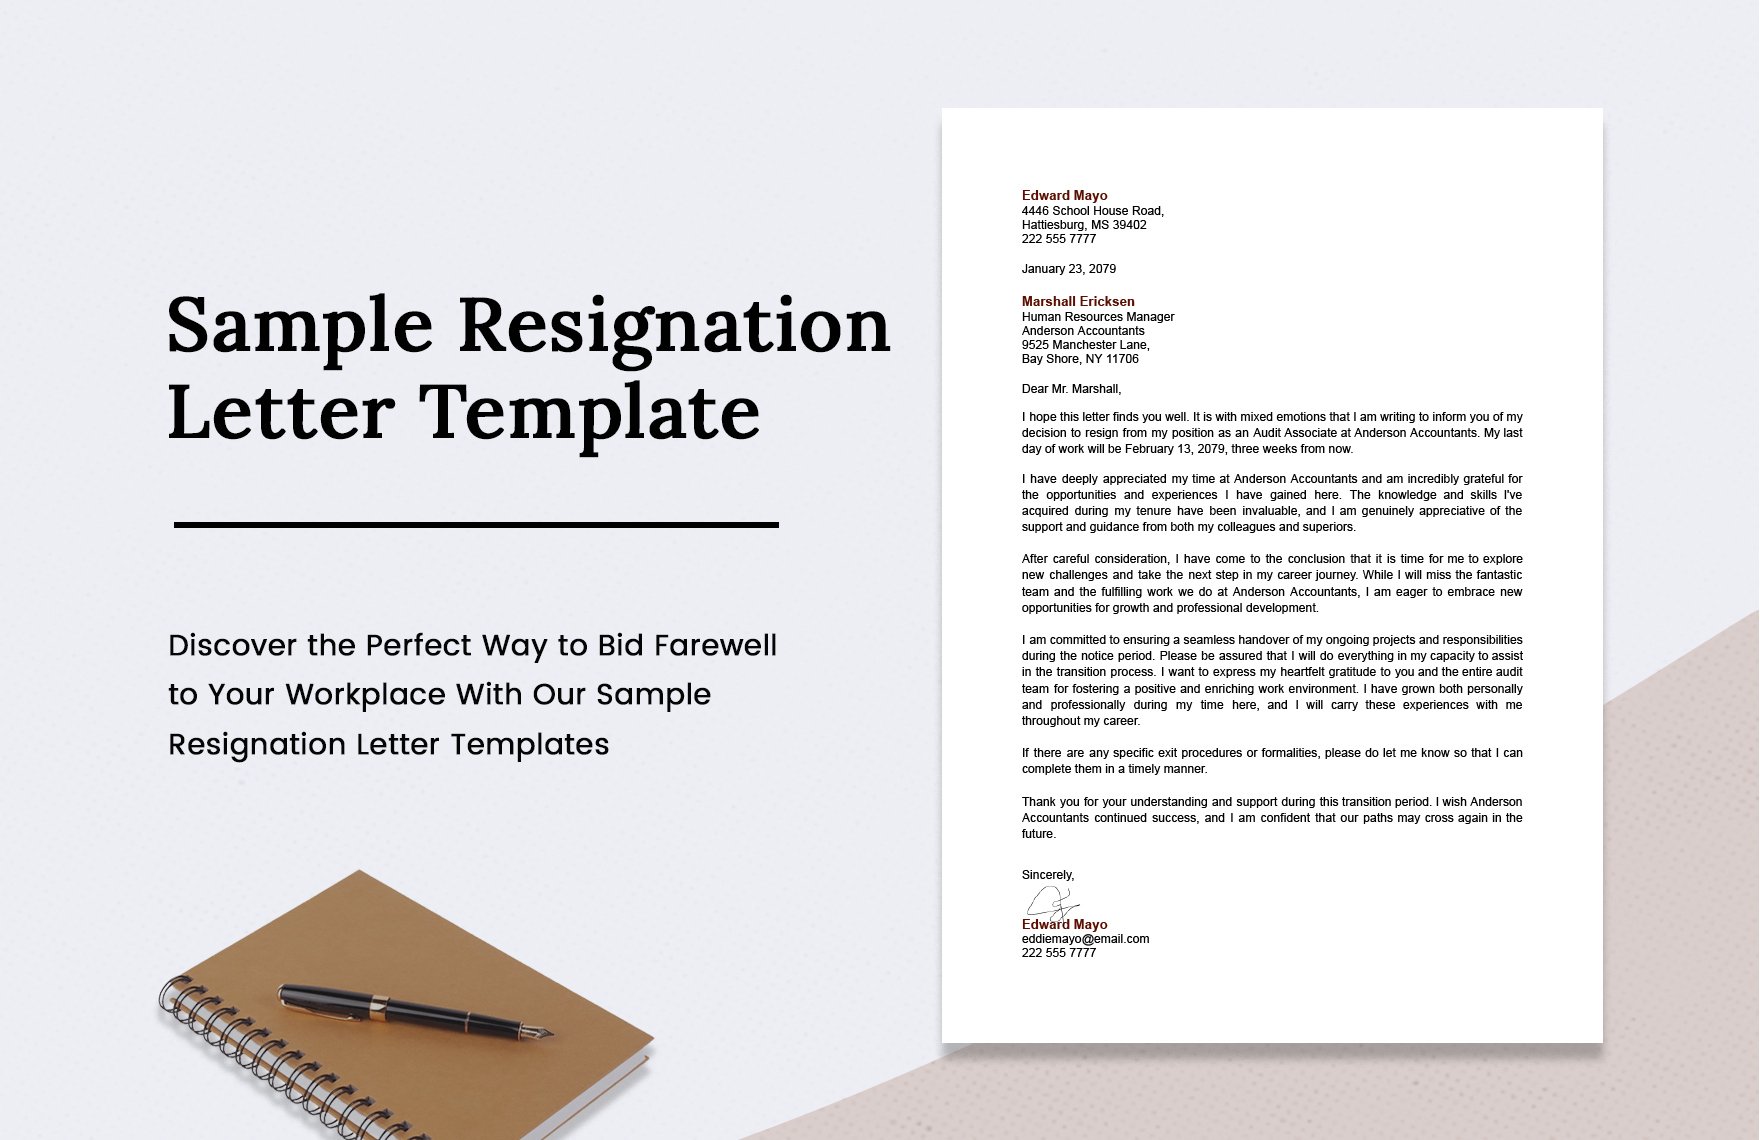 Sample Resignation Letter in Word, Google Docs, PDF